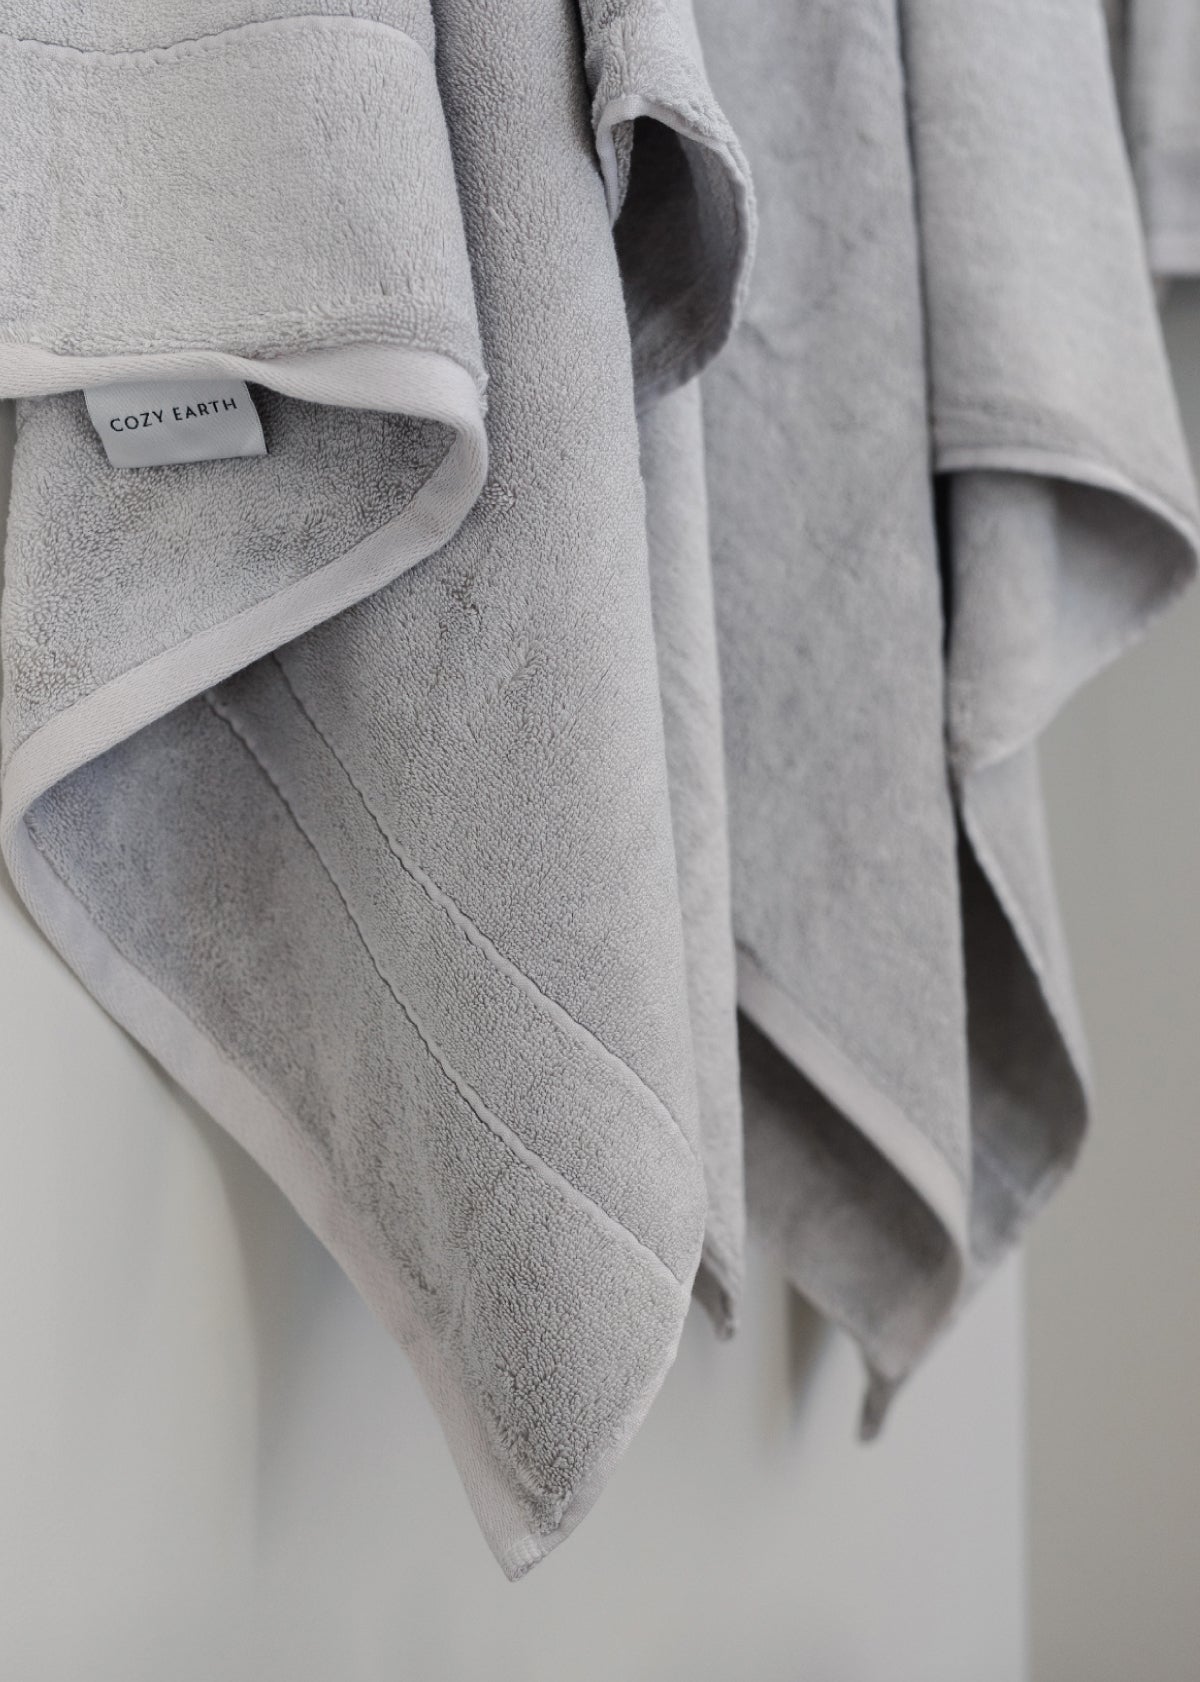 Premium Plush Bath Towel in the color Light Grey. Photo of Light Grey Premium Plush Bath Towel taken as a close up of the Premium Plush Bath Towel. 